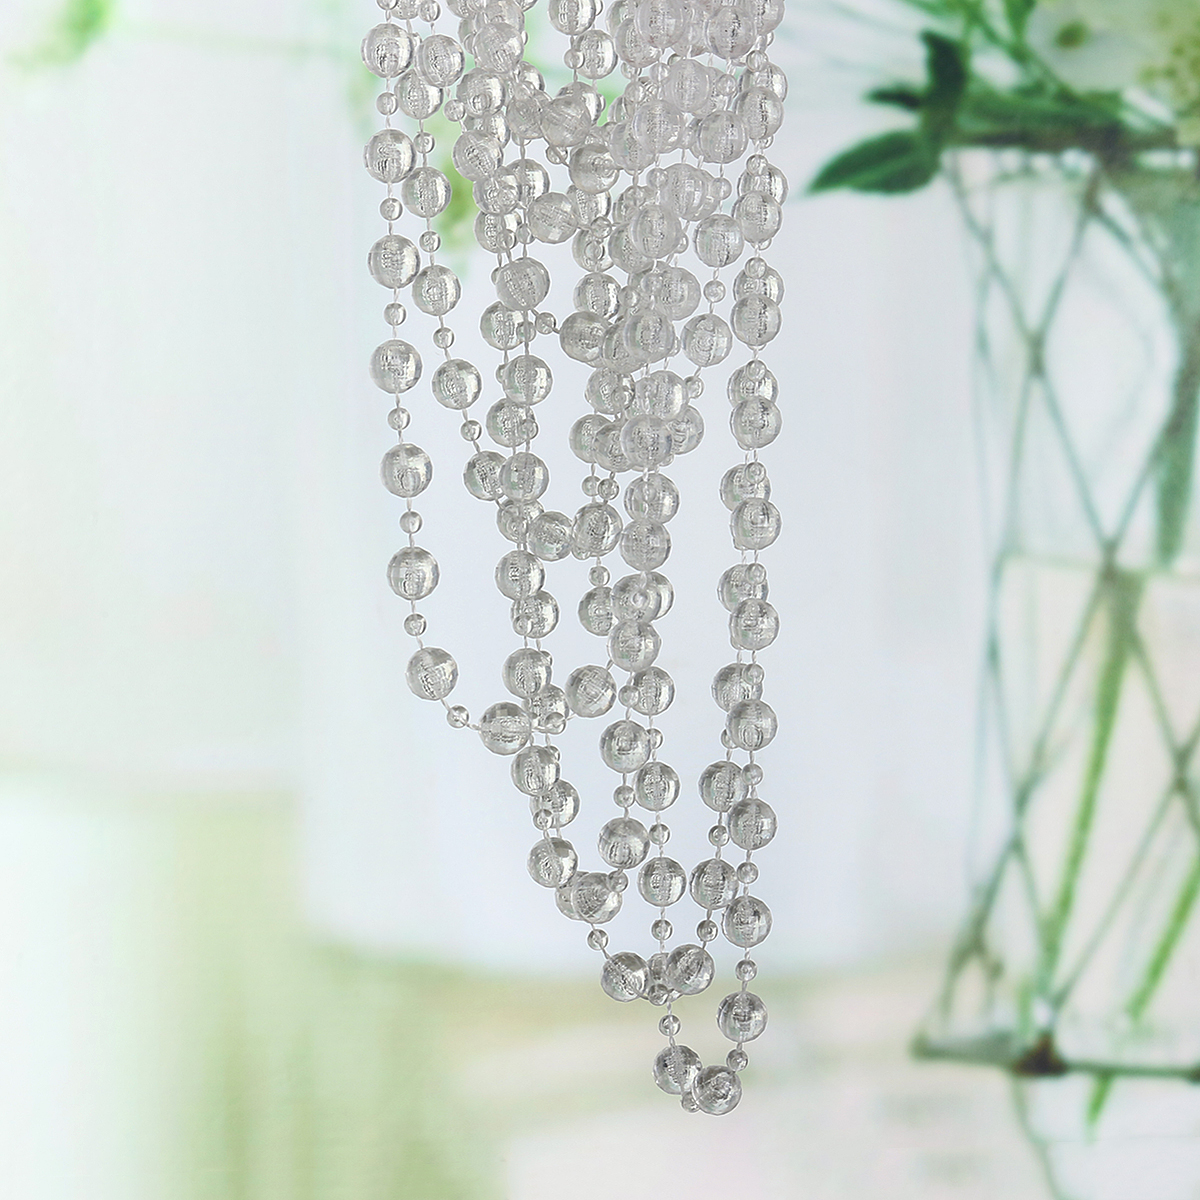 16FT Garland Diamond Strand Acrylic Crystal Bead Curtain Wedding DIY Party Decor 